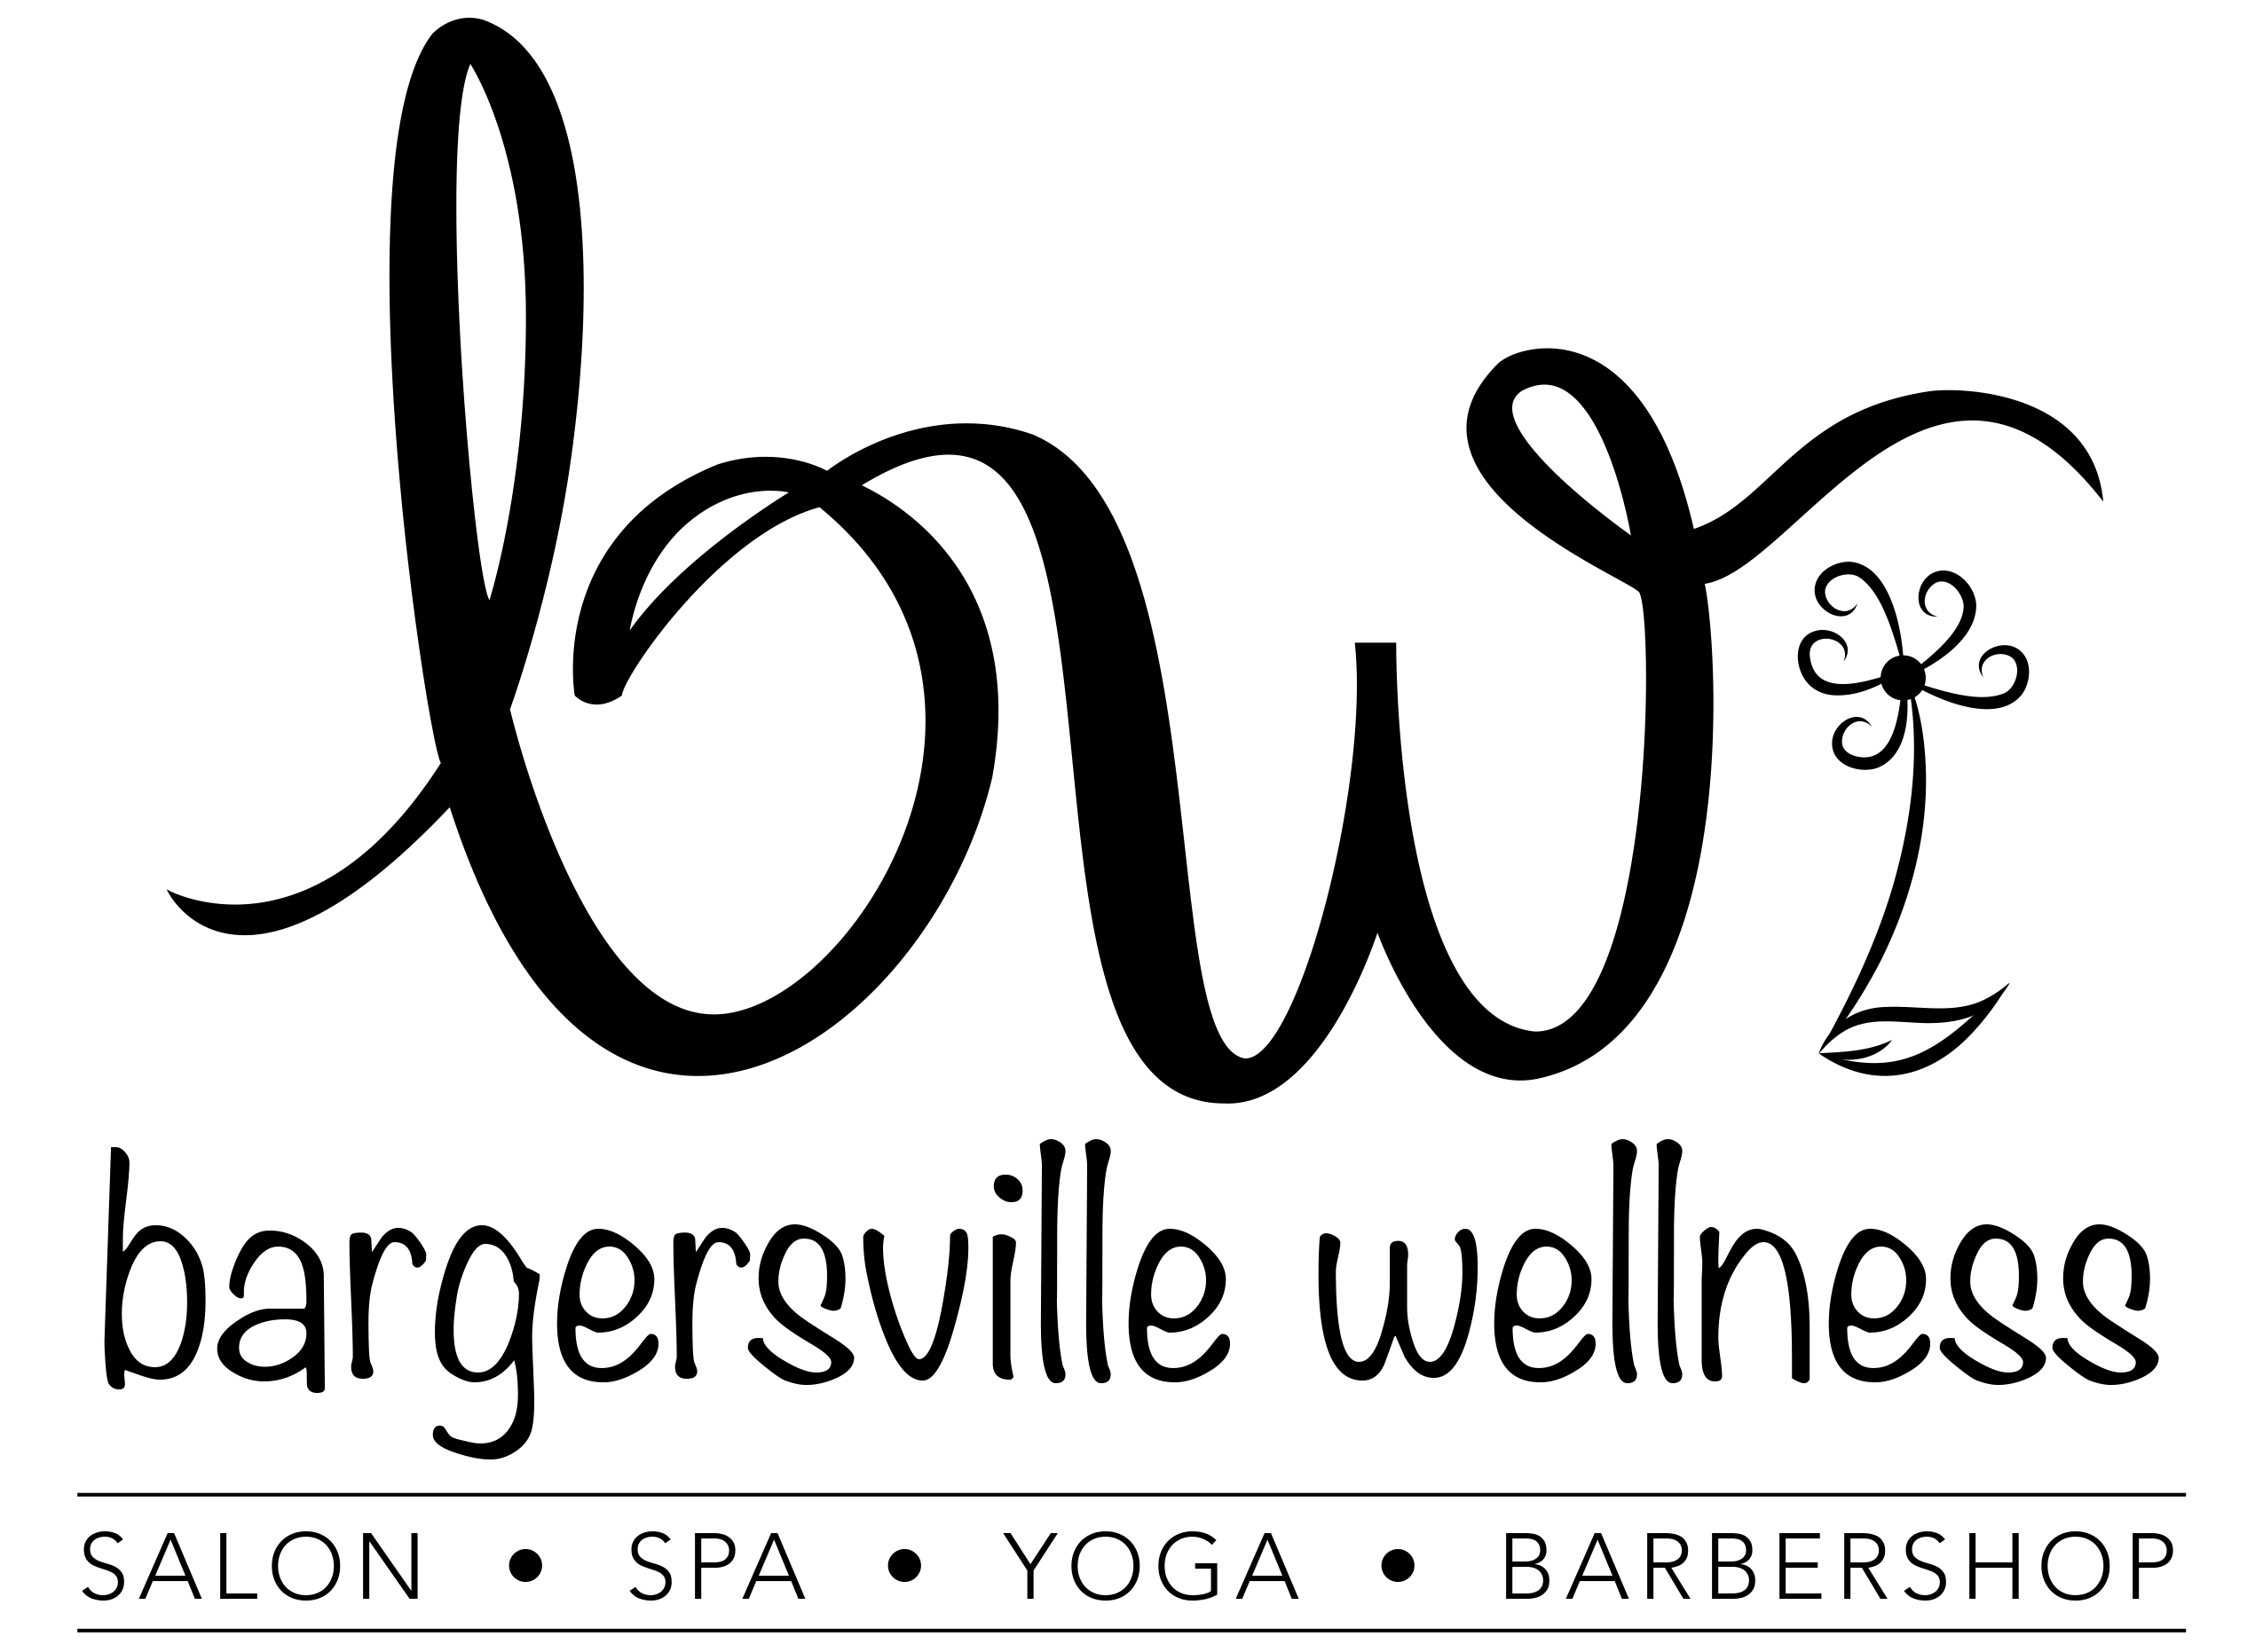 Bargersville Wellness Salon, Spa, Yoga, Barbering